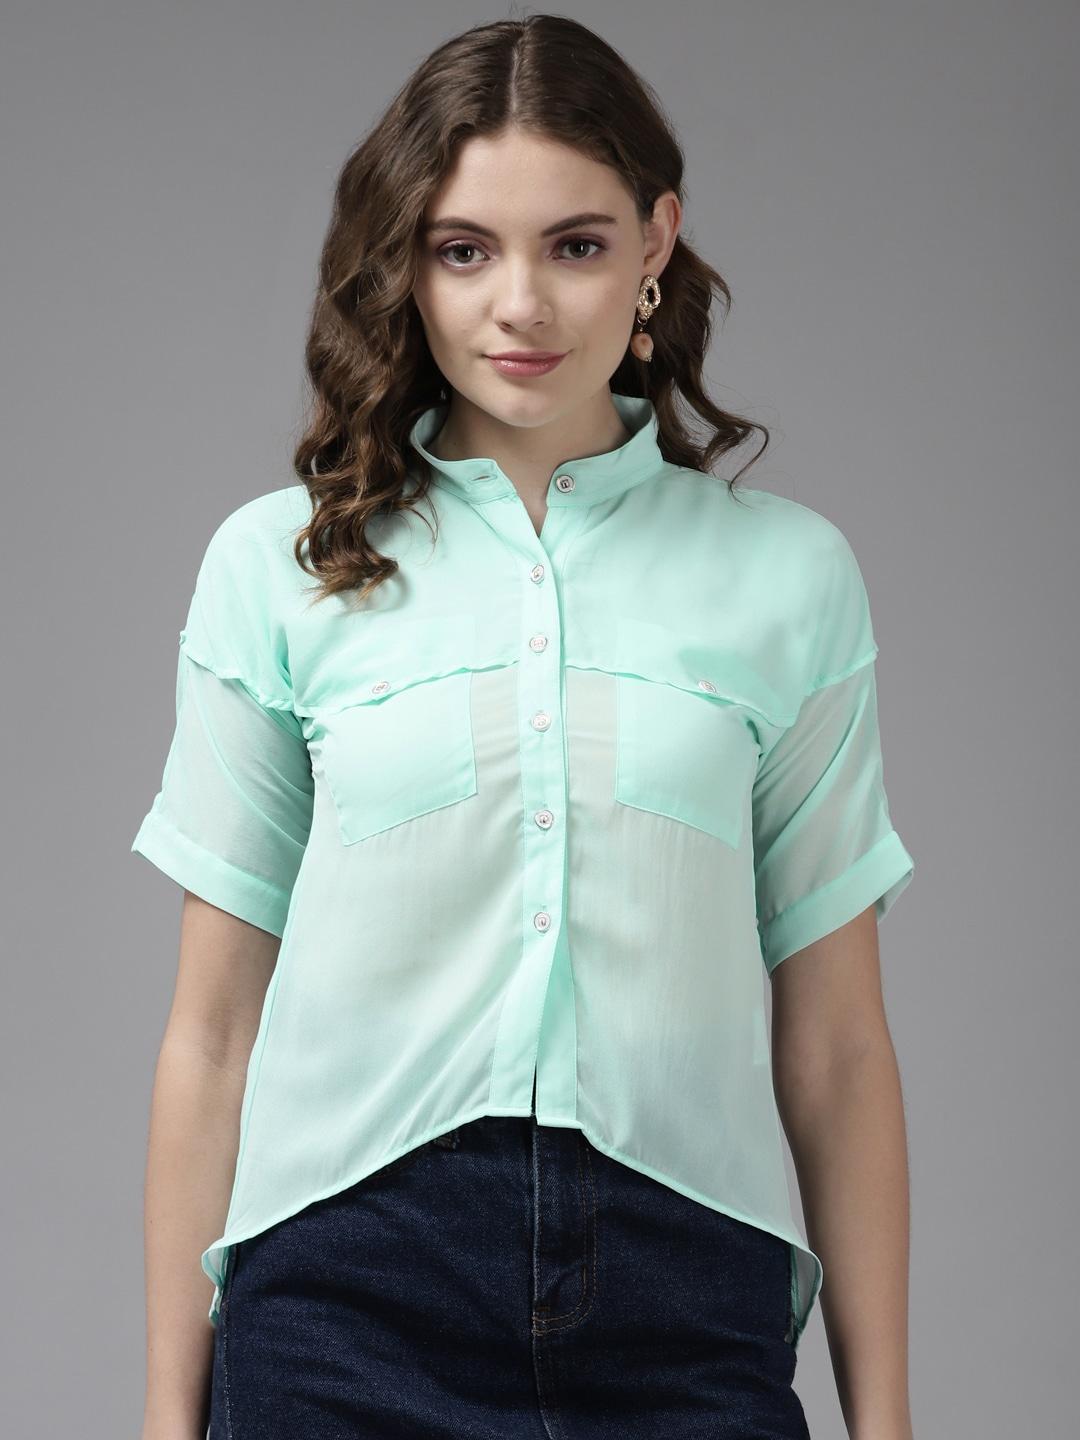 aarika green mandarin collar georgette shirt style top